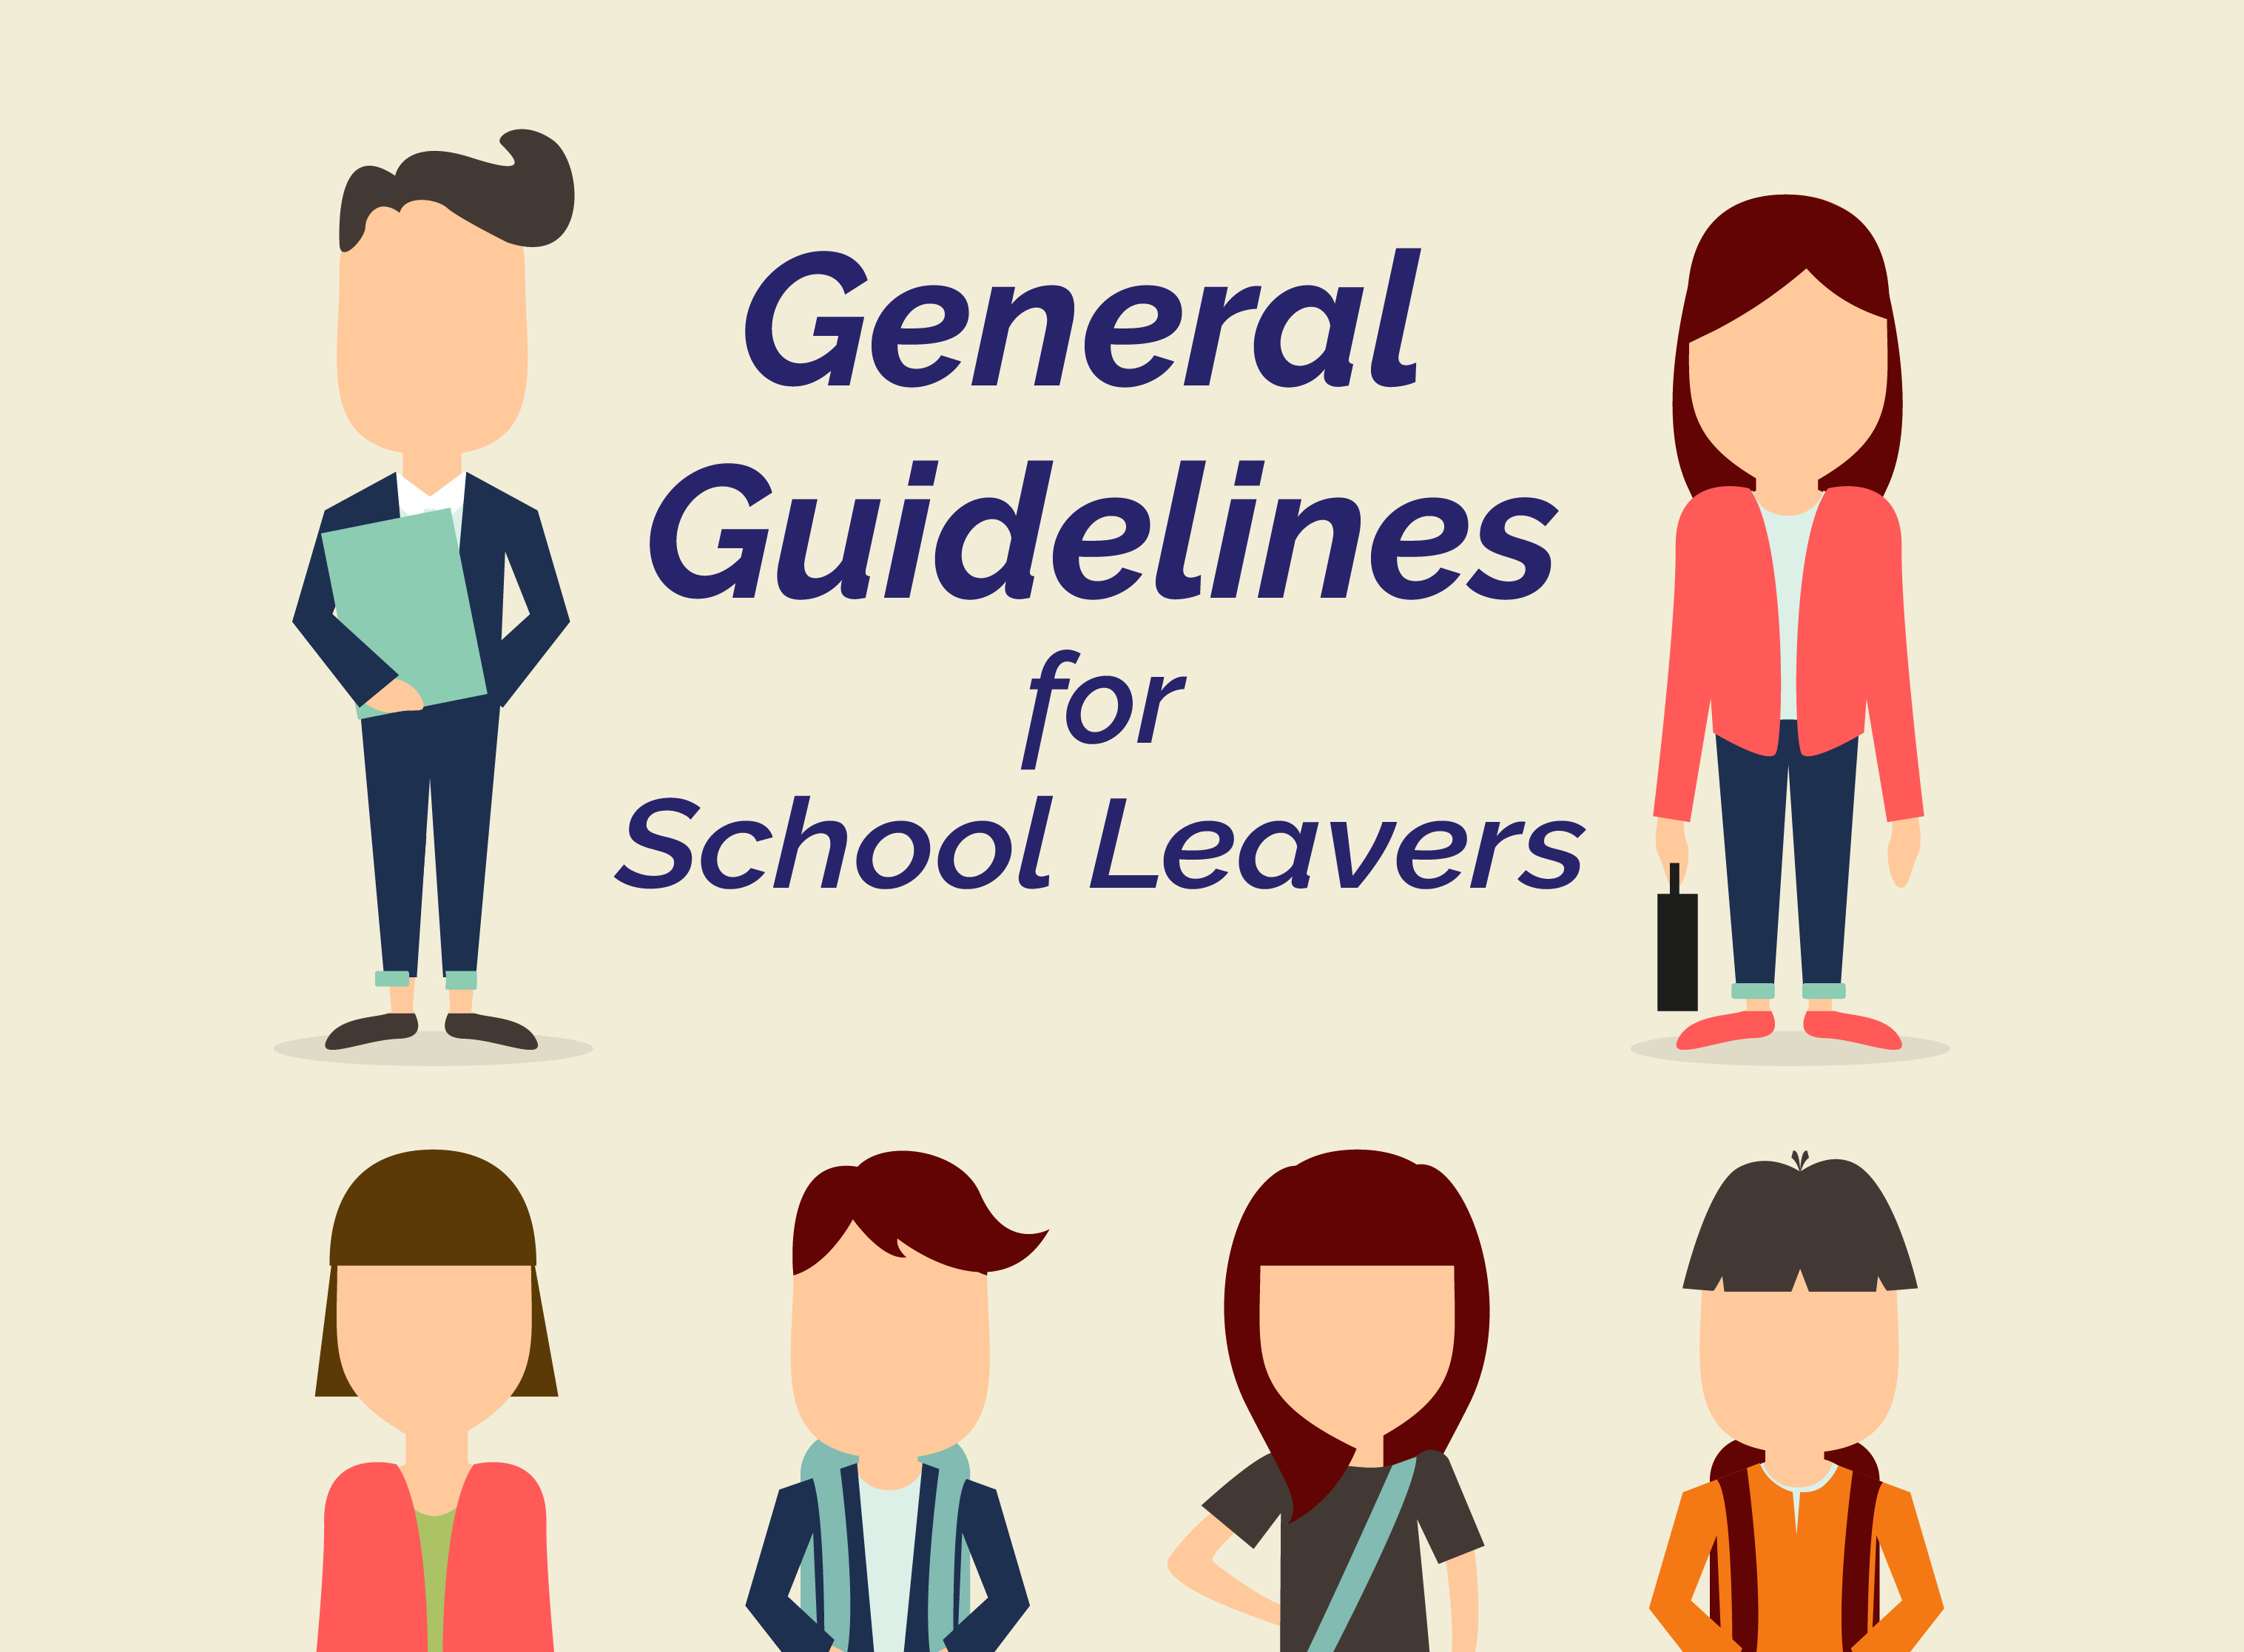 General guidelines for school leavers